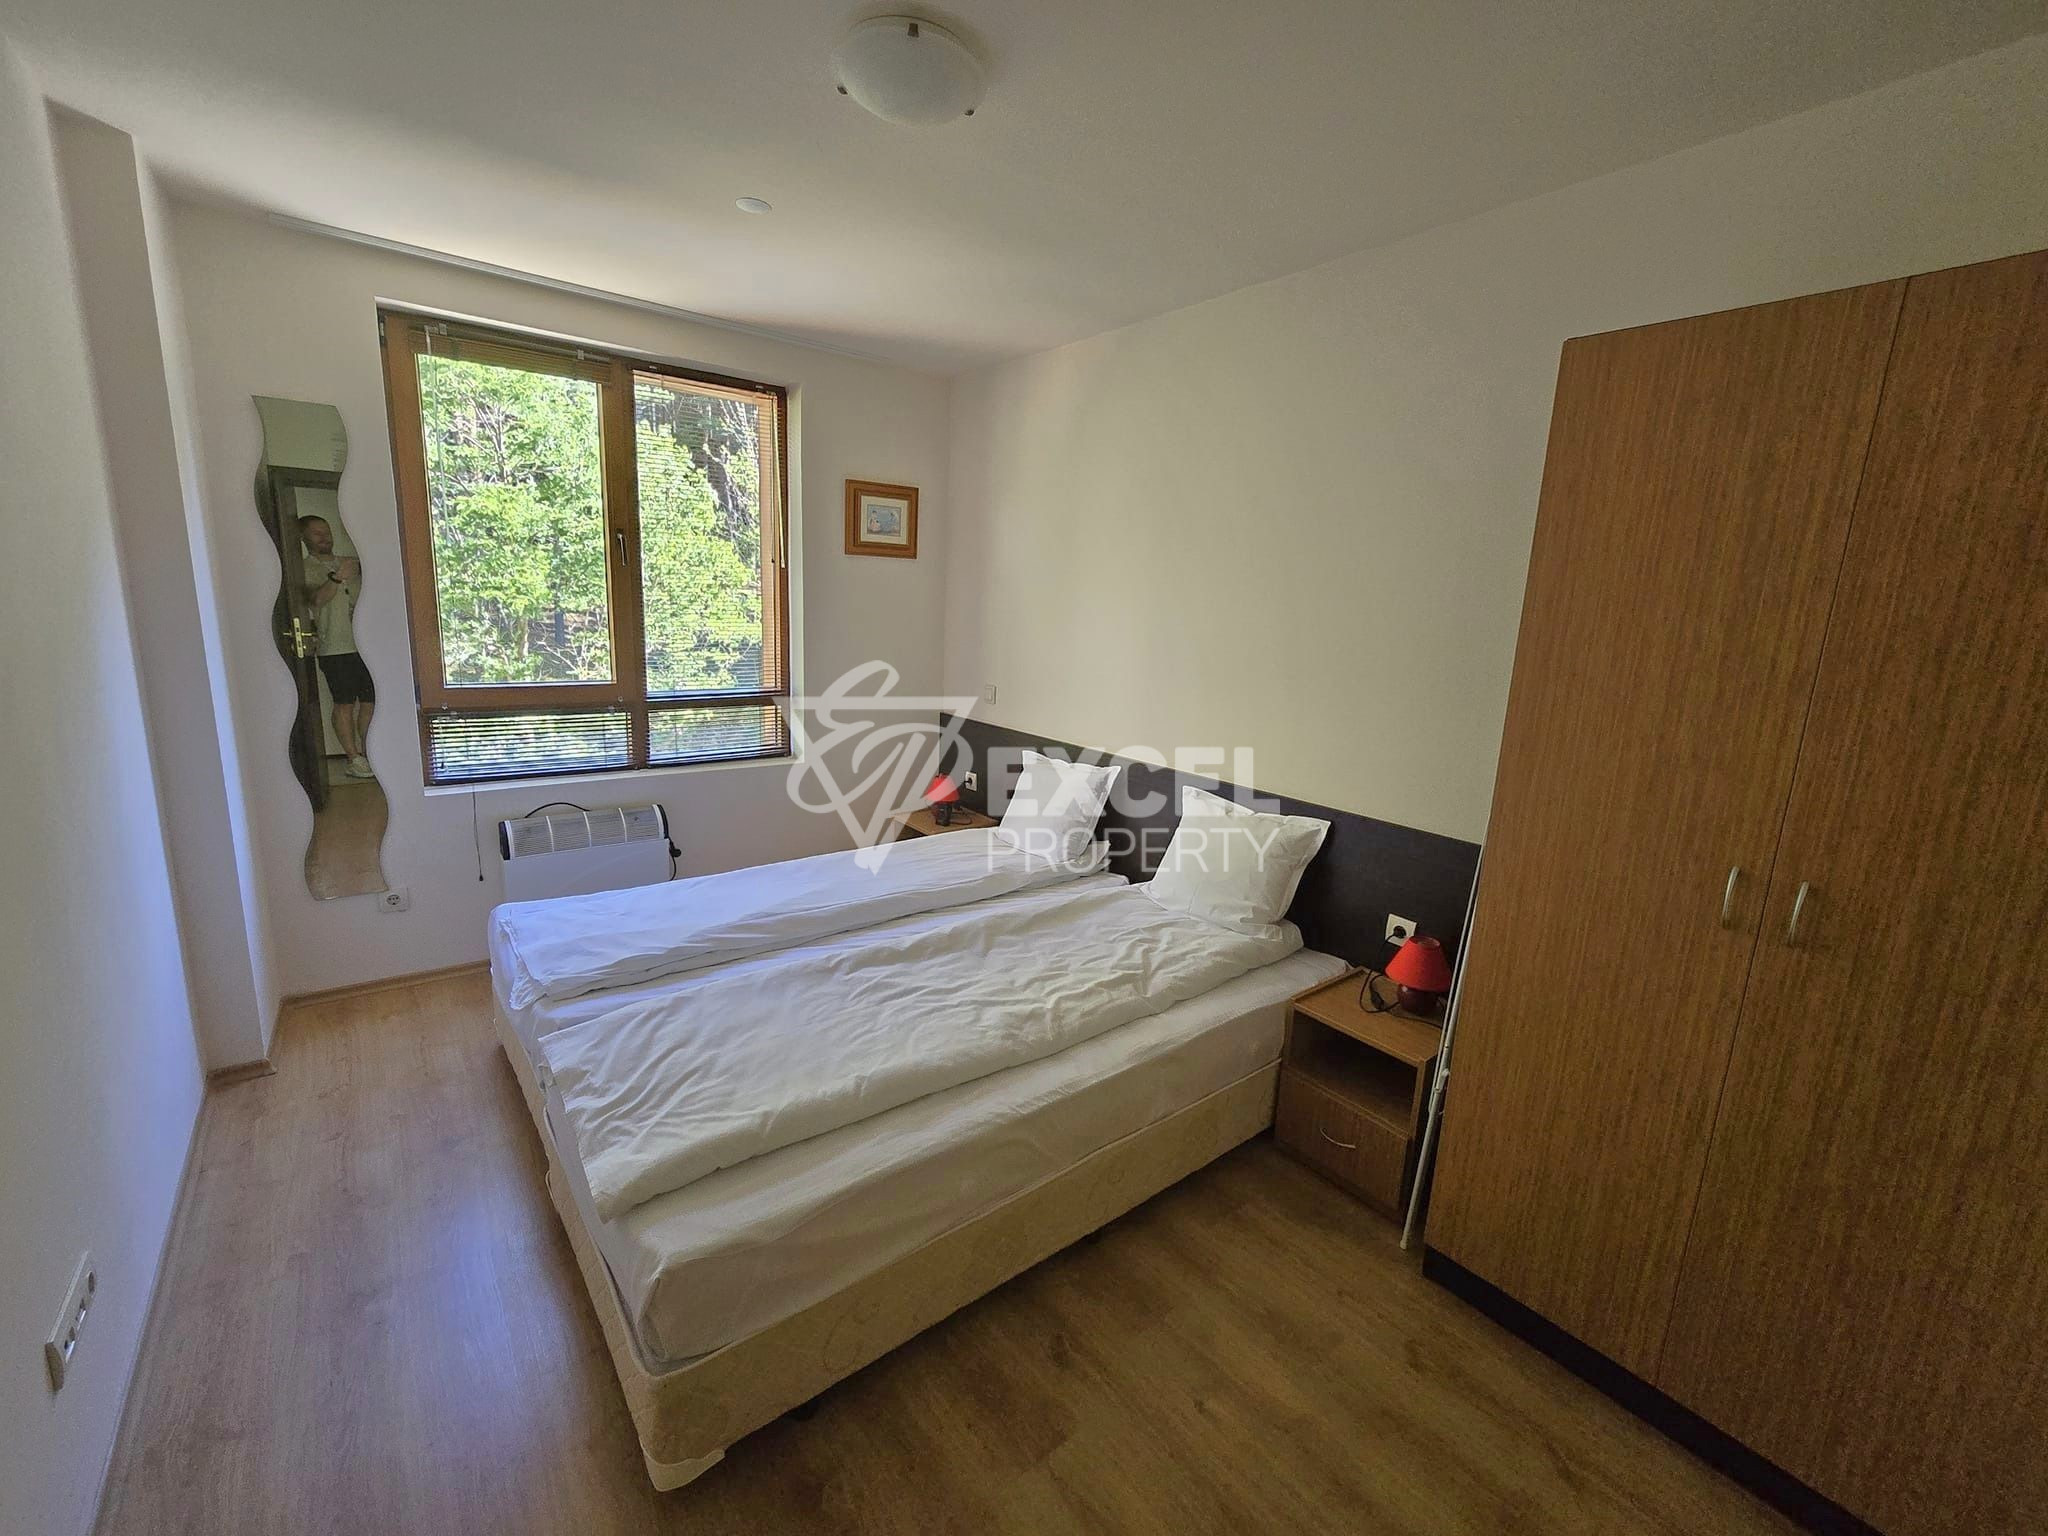 Two-bedroom apartment for sale in Bansko! Bargain Price!